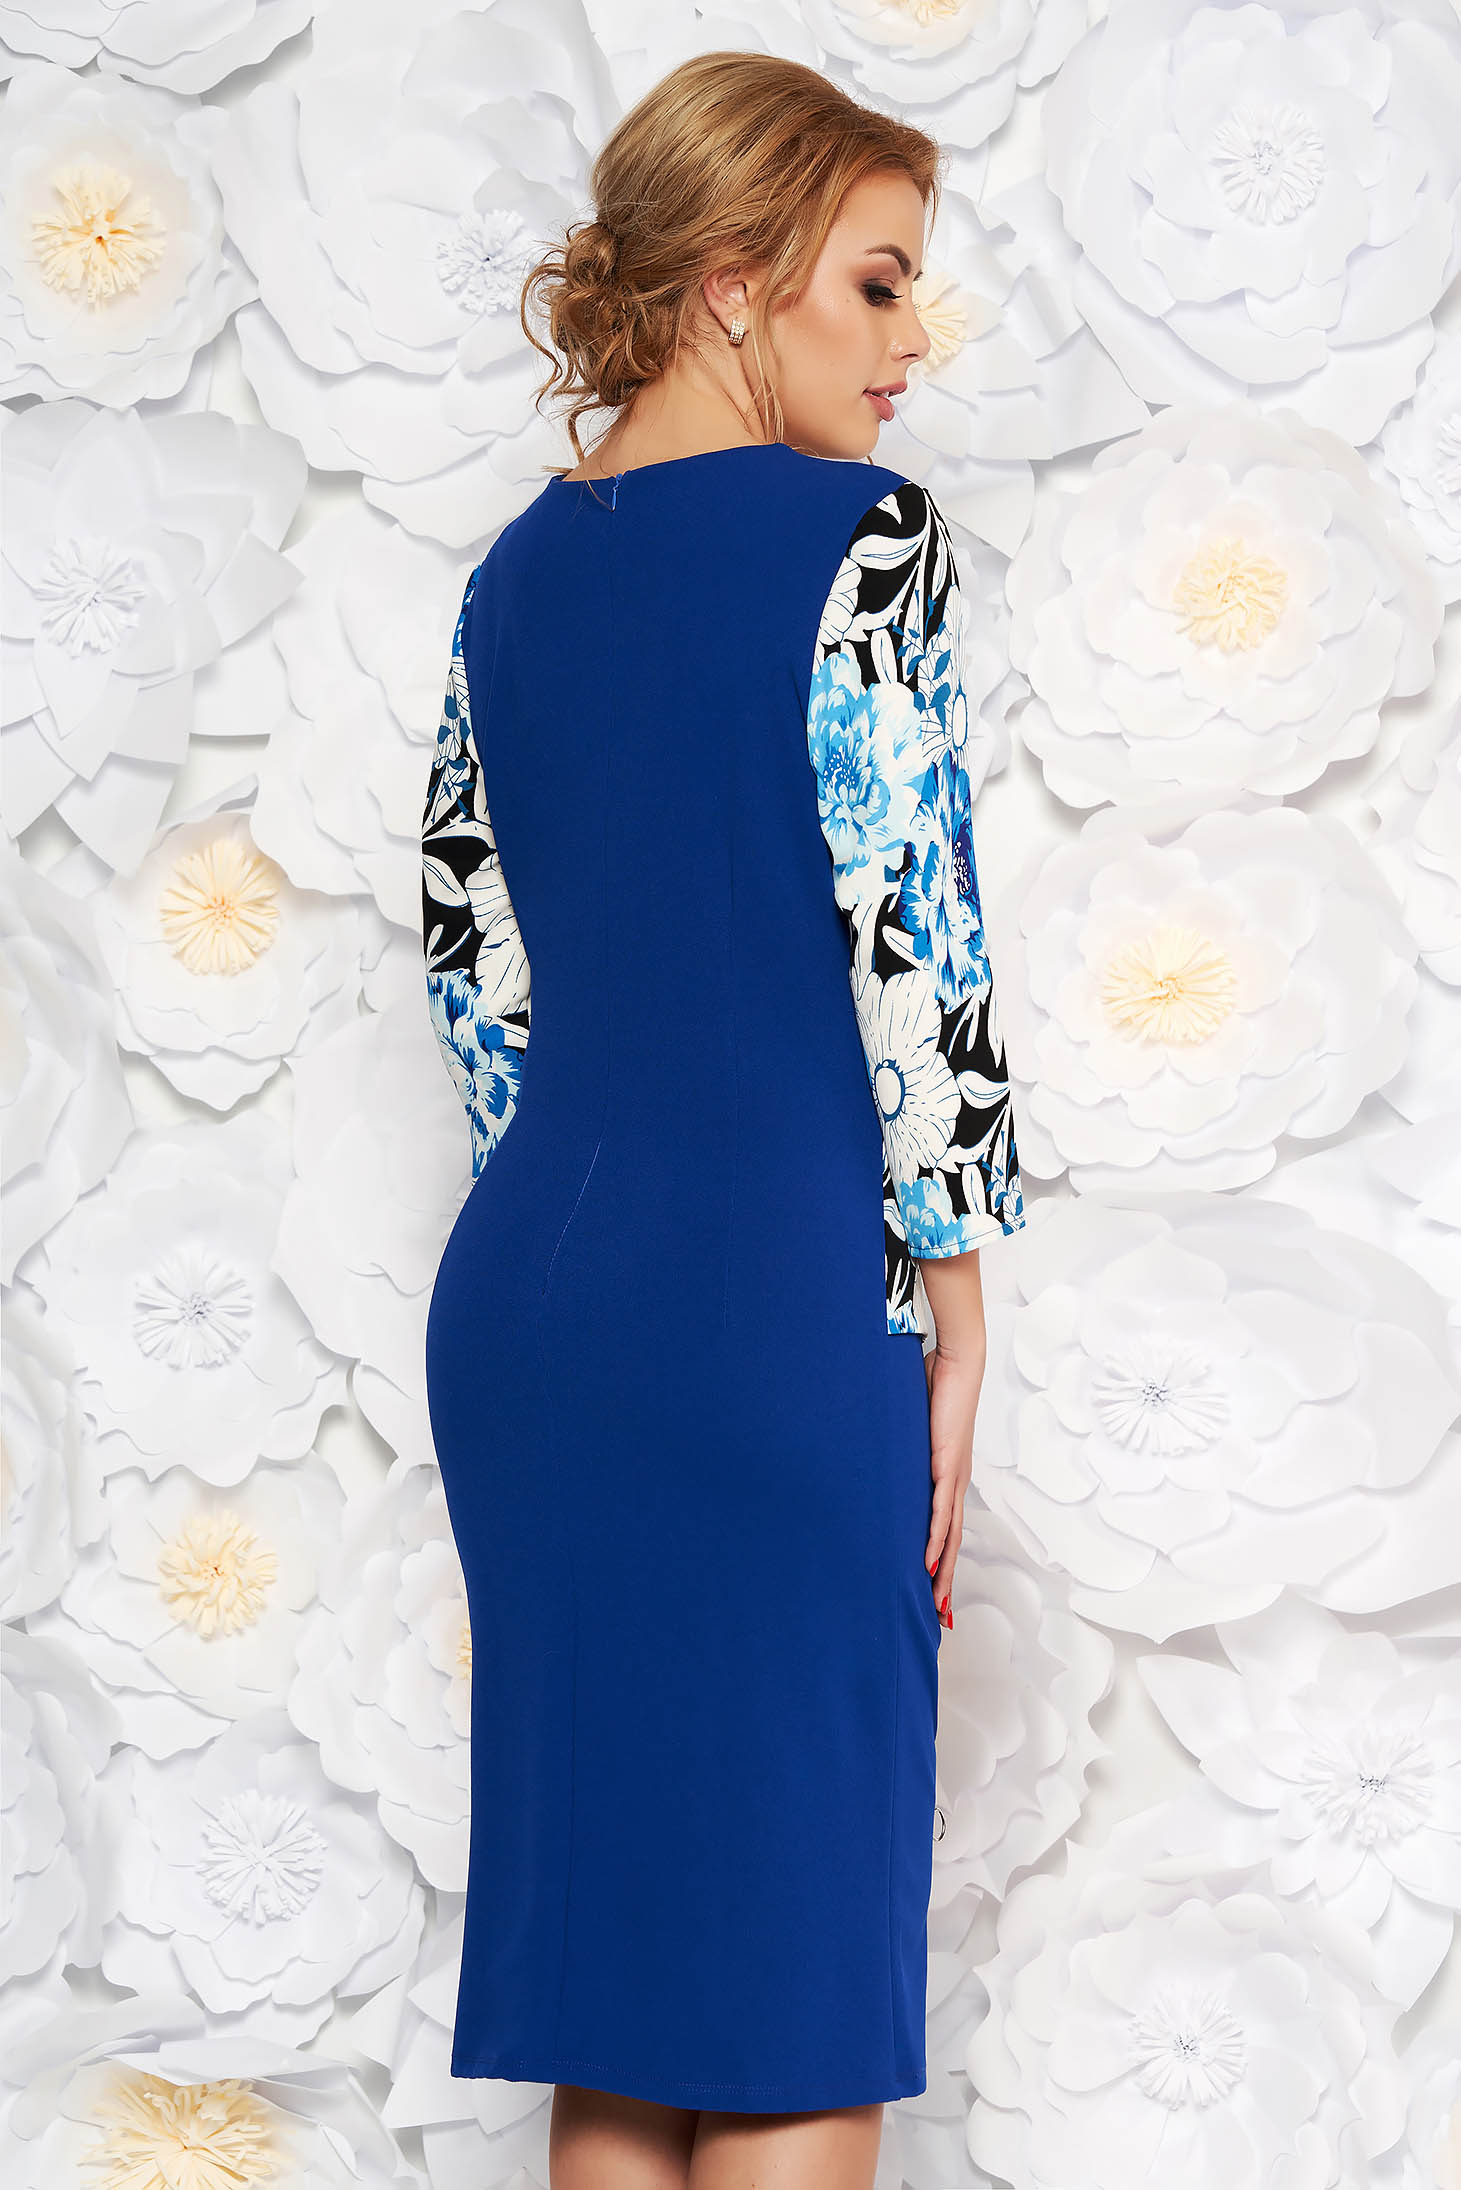 Blue elegant midi pencil dress slightly elastic fabric with floral prints 2 - StarShinerS.com